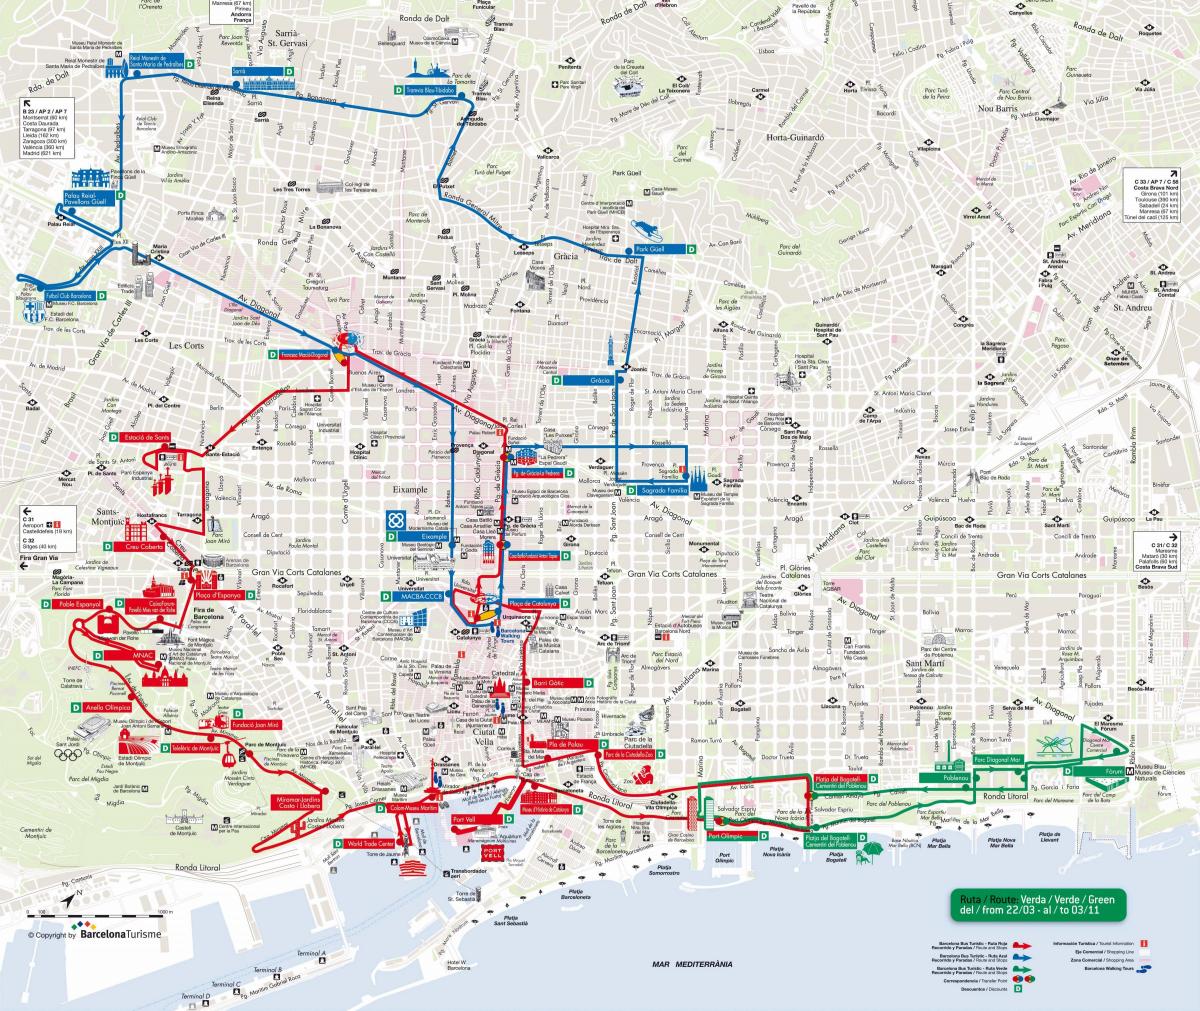 Barcelona bus tour, mapa